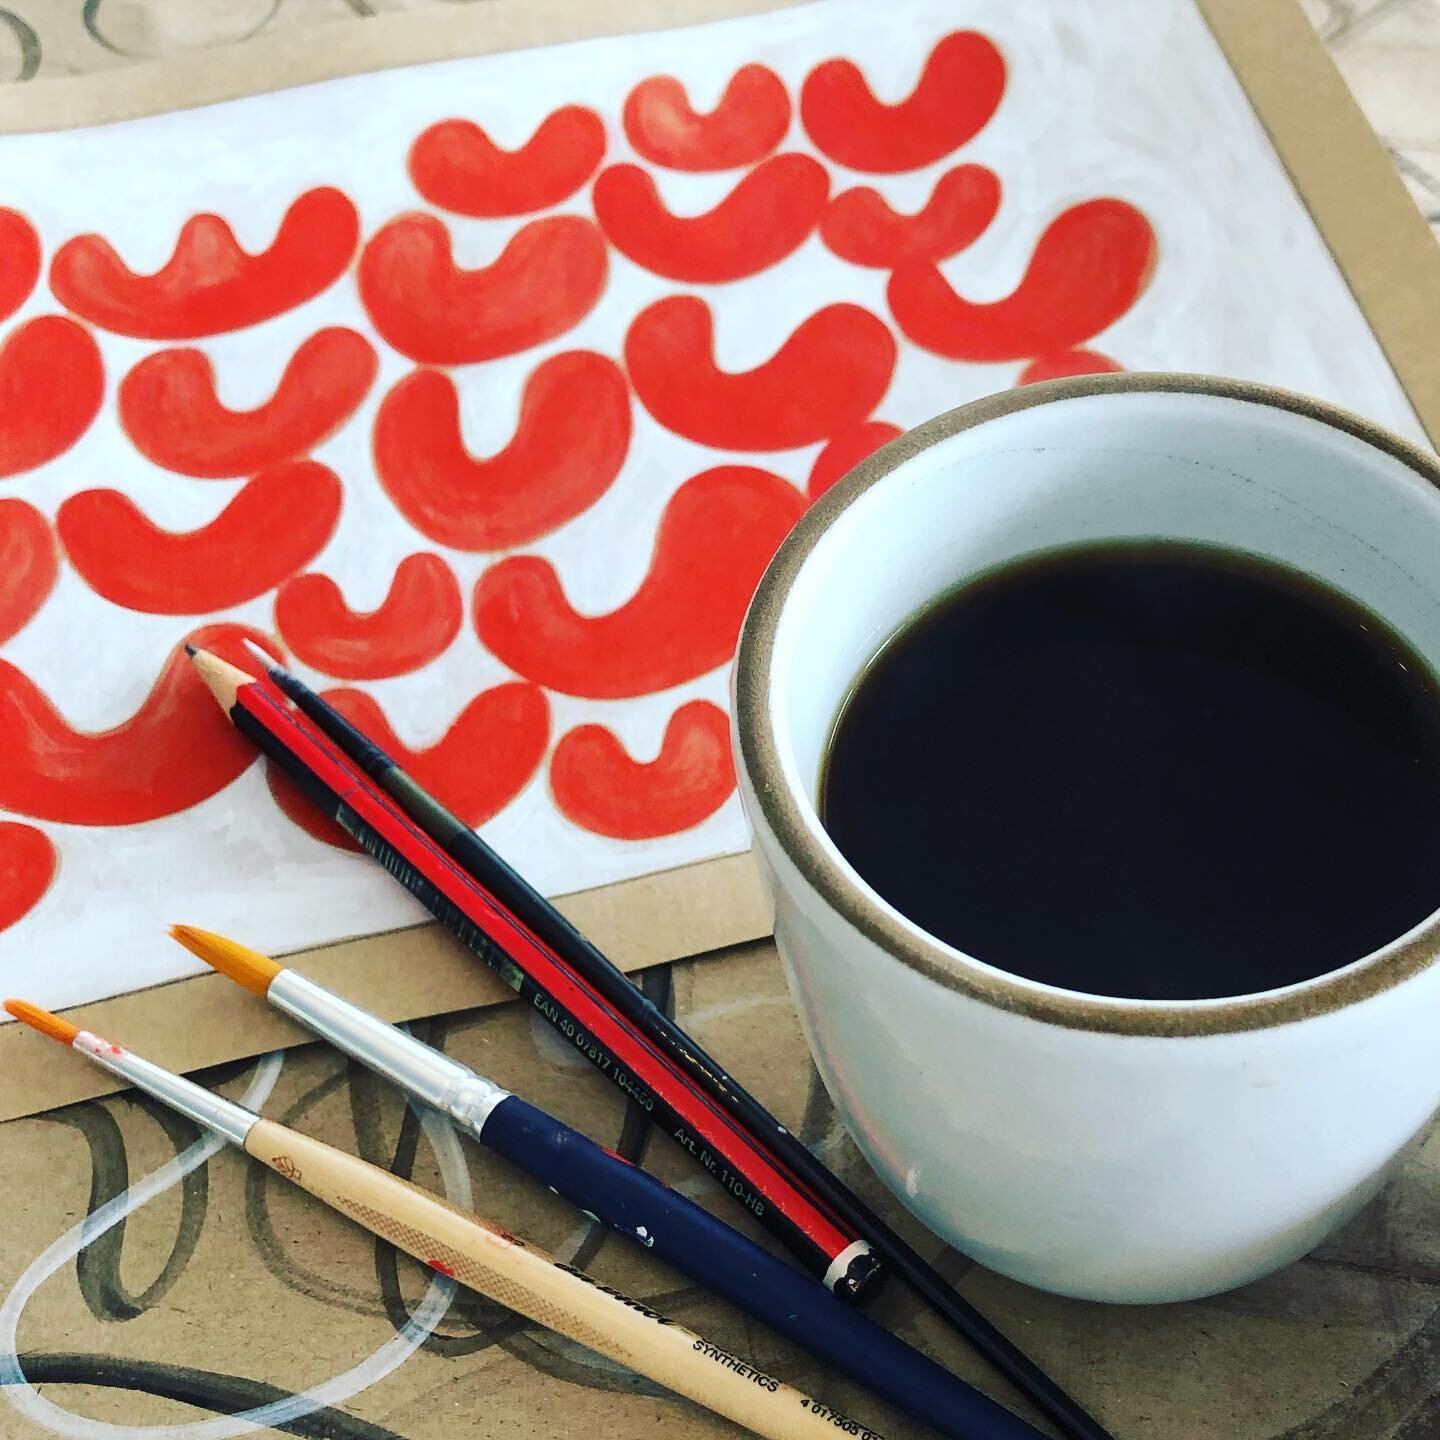 Coffee &amp; Painting! 
☕️ #paint #painter #artistsoninstagram #morningroutine